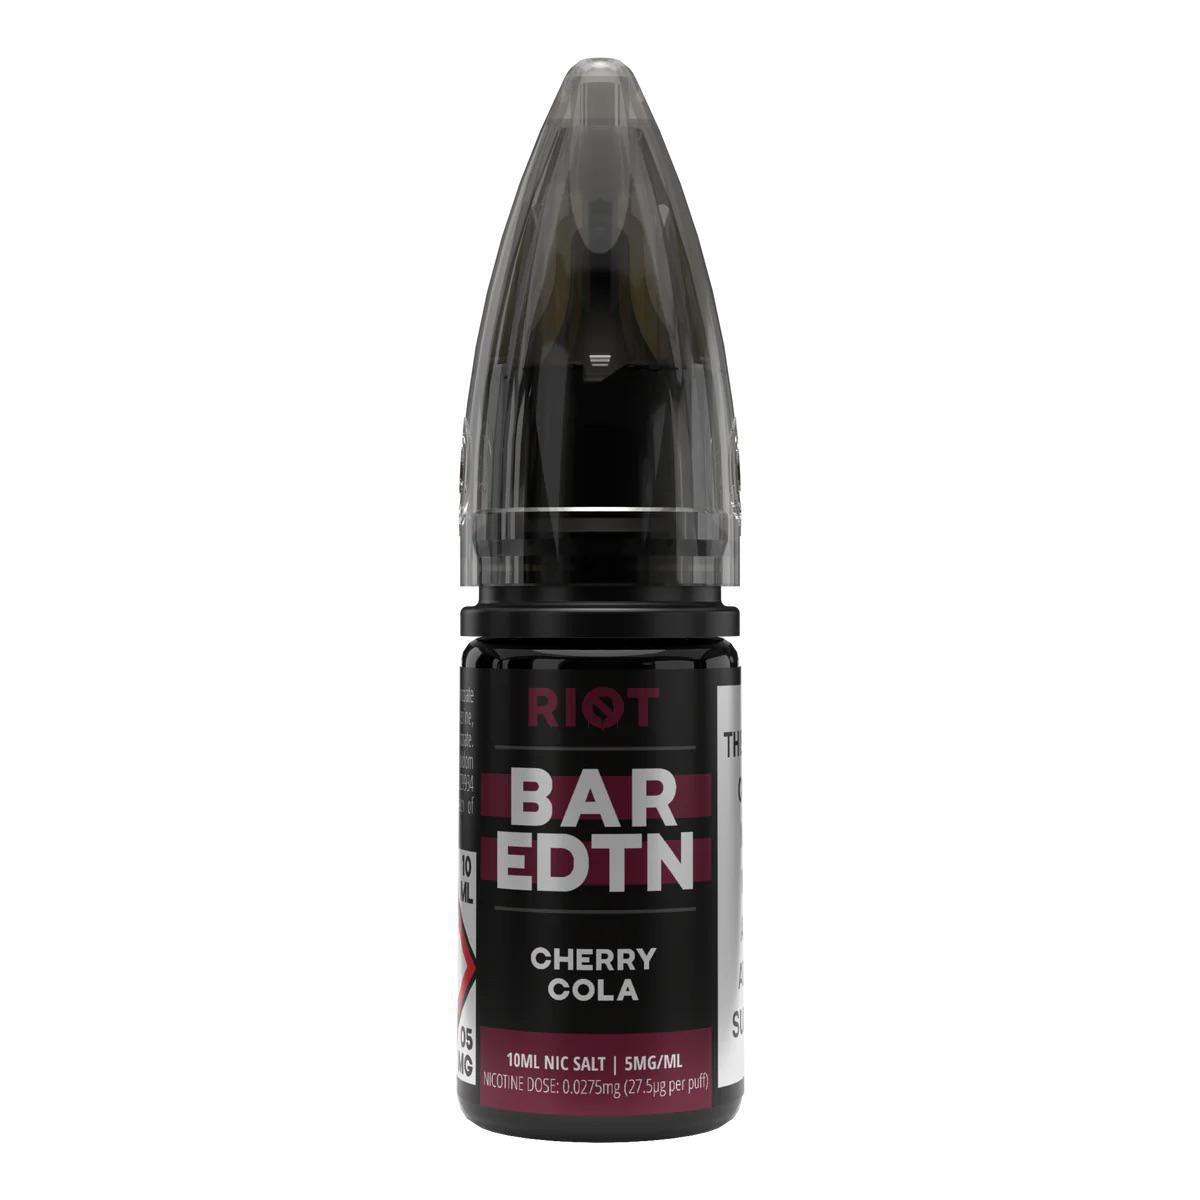 RIOT Bar EDTN - Cherry Cola 10ml E-Liquid - The British Vape Company